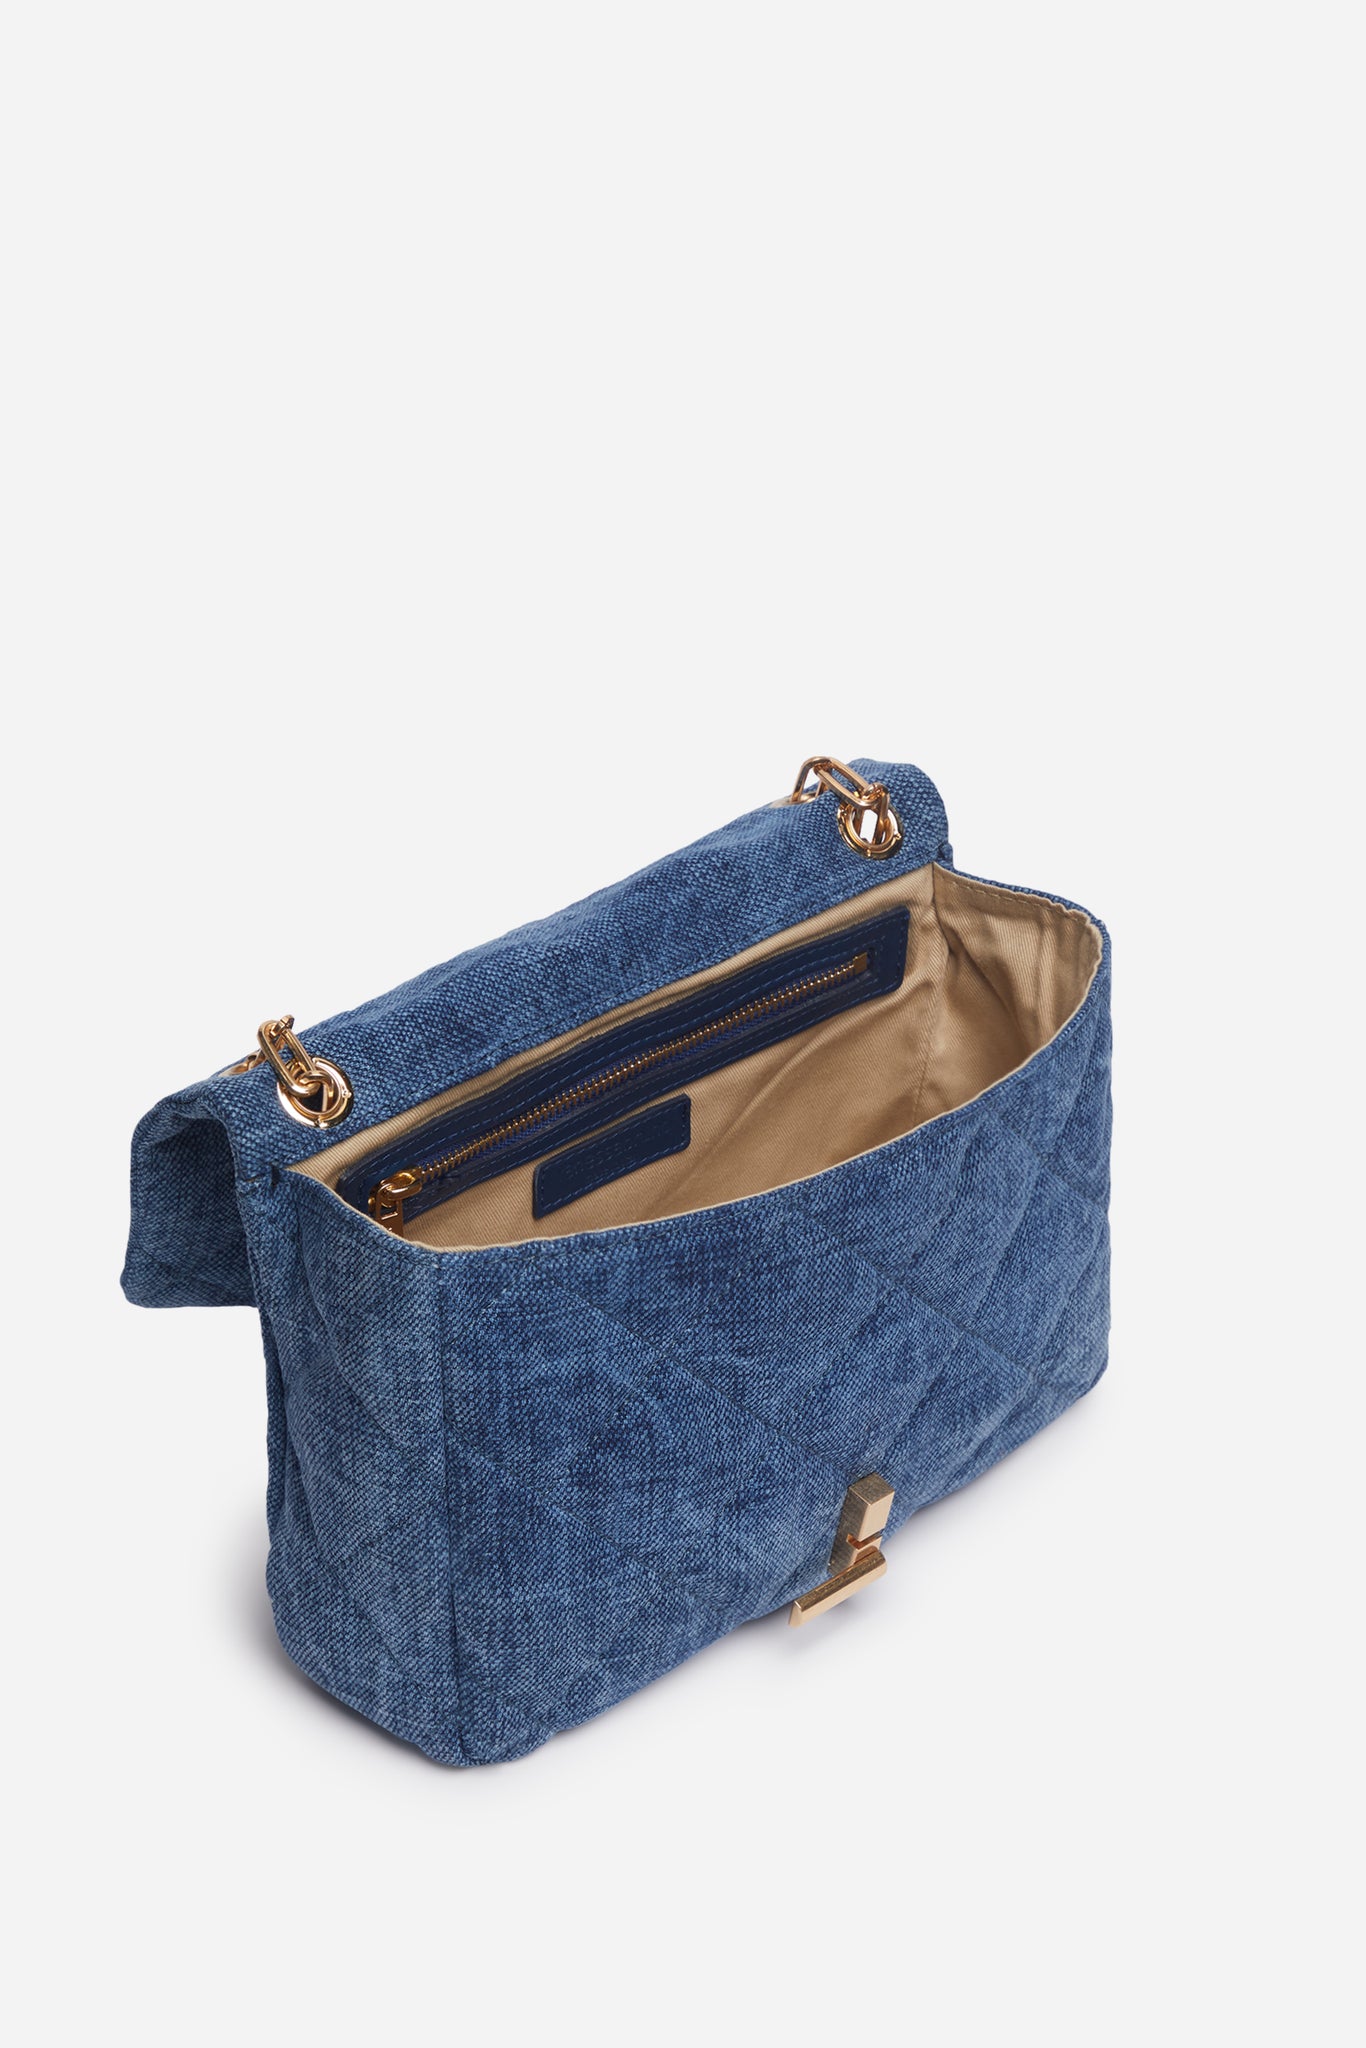 Linen Moon handbag, indigo